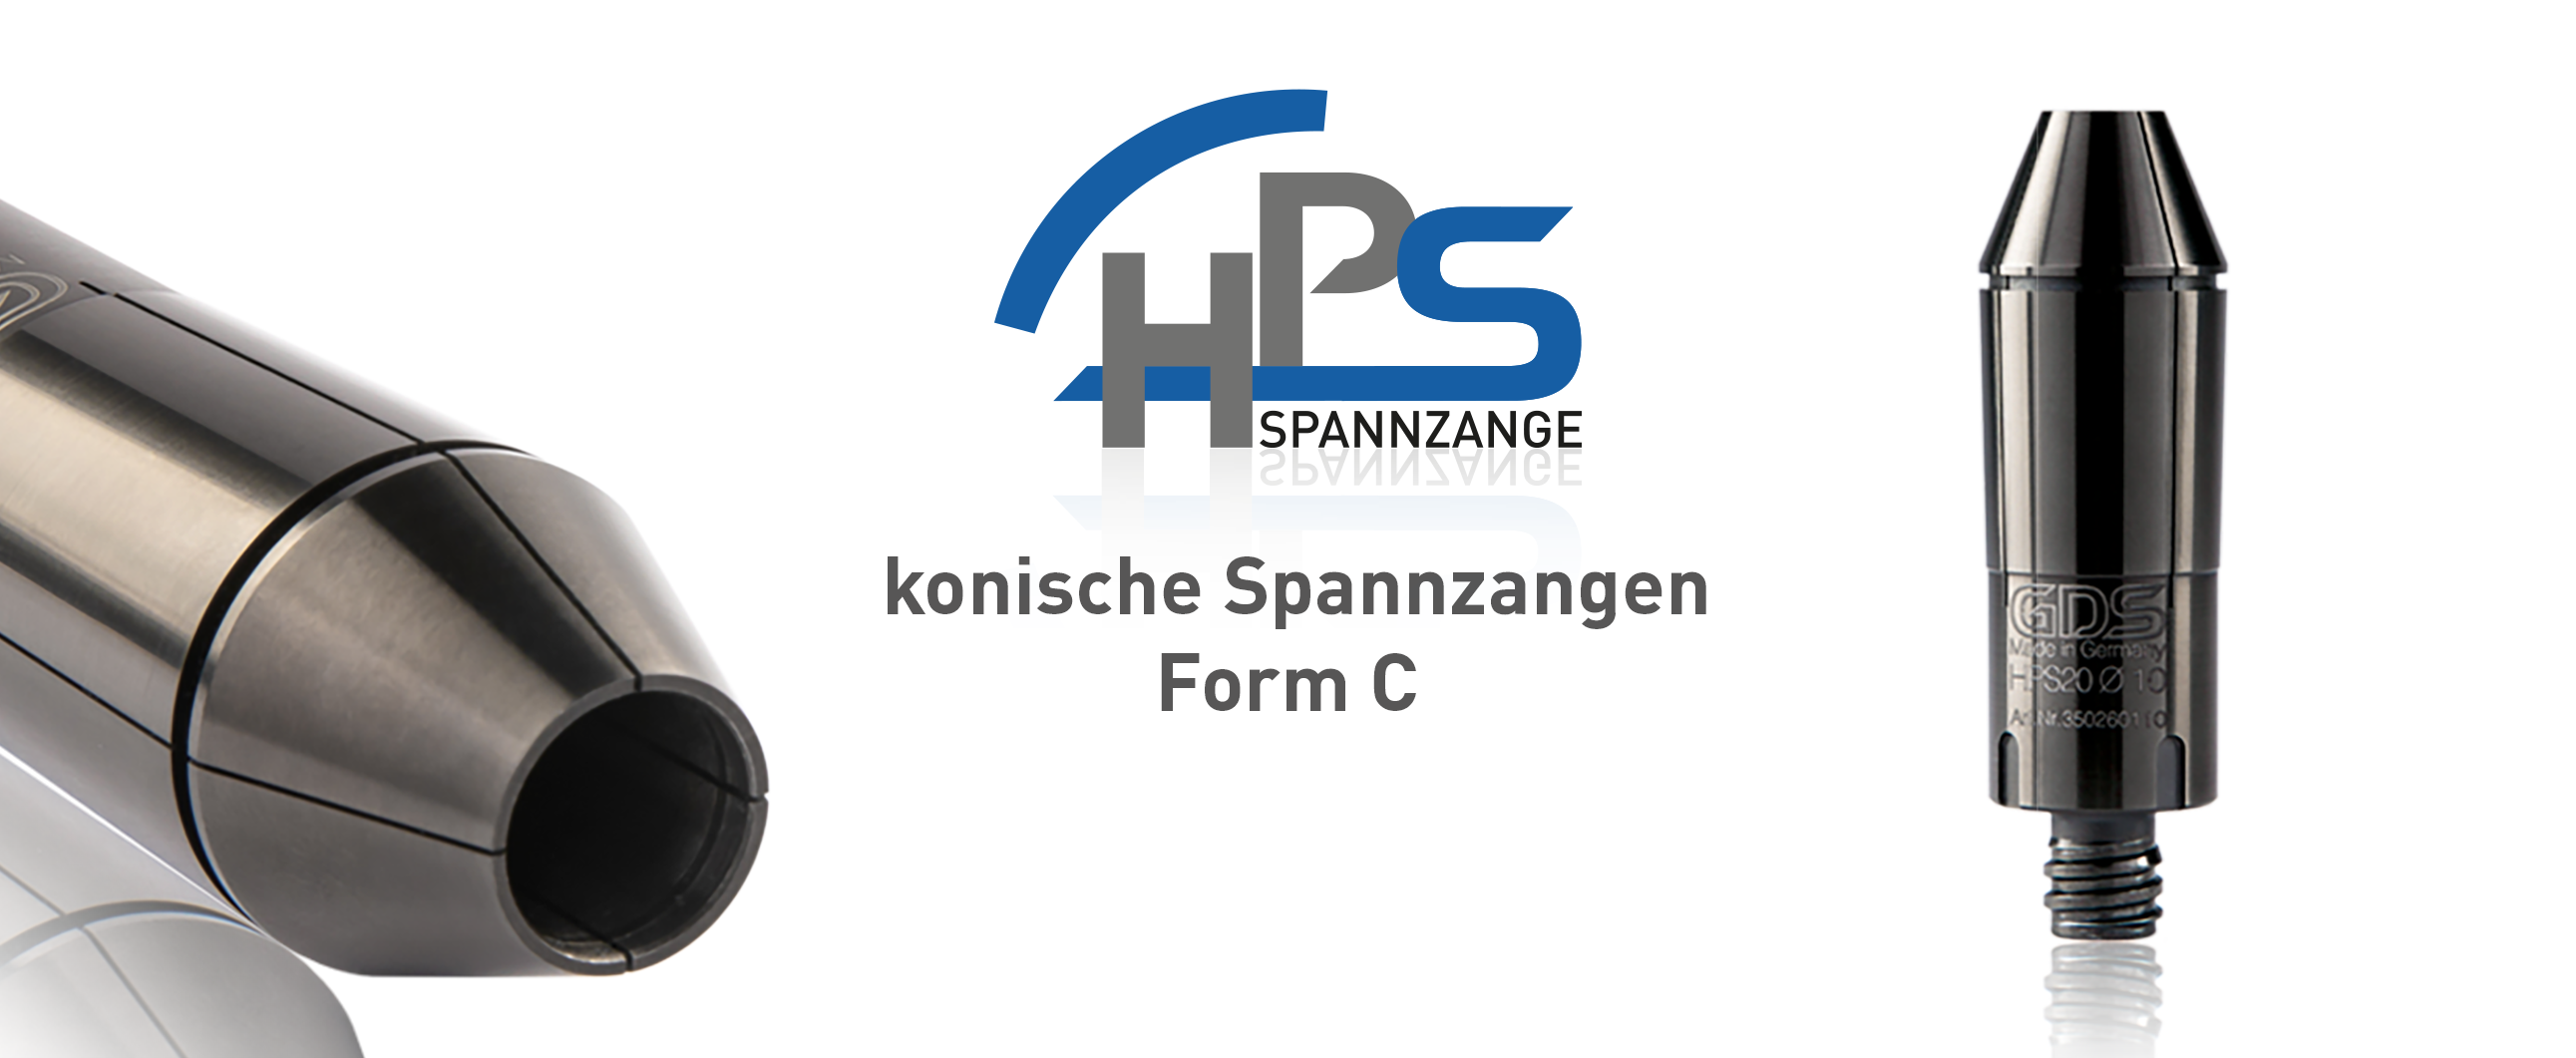 konische HPS Spannzangen Form C